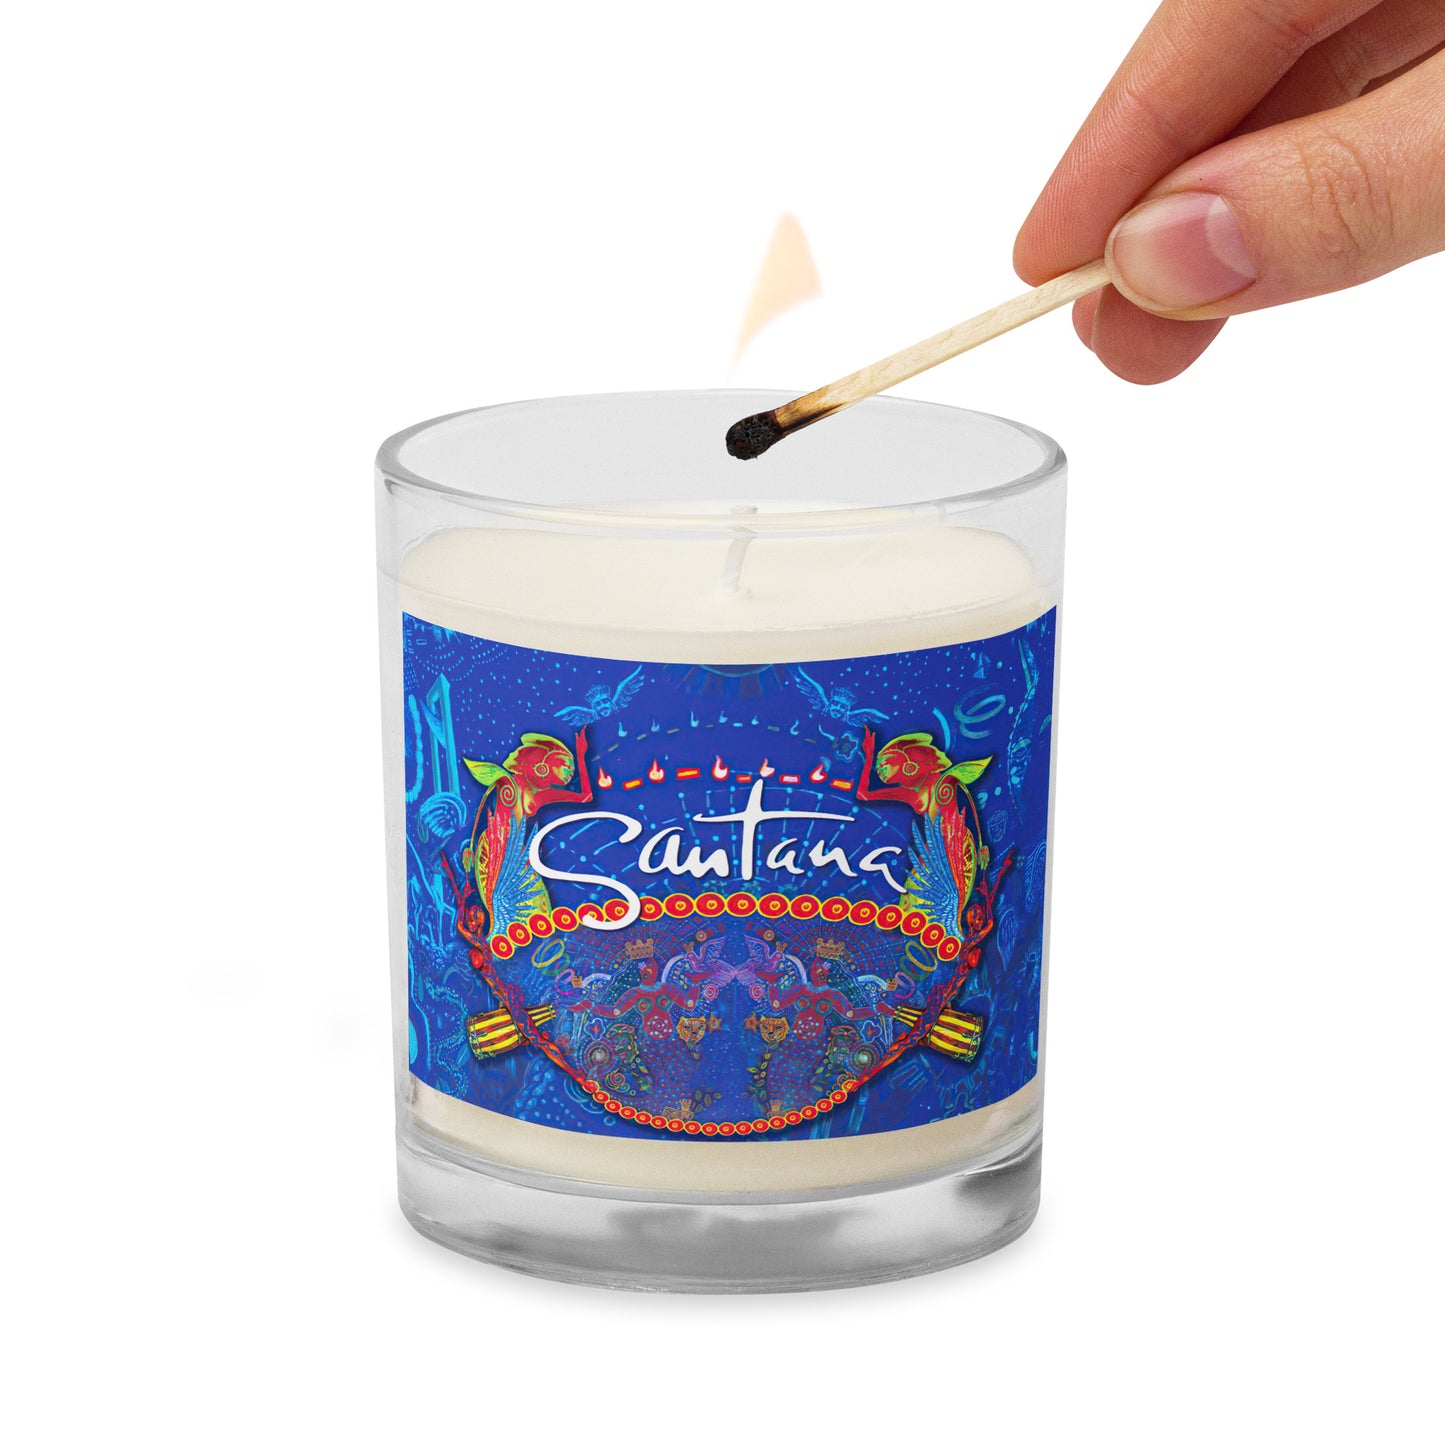 Santana Holiday Glass Jar - Soy Wax Candle